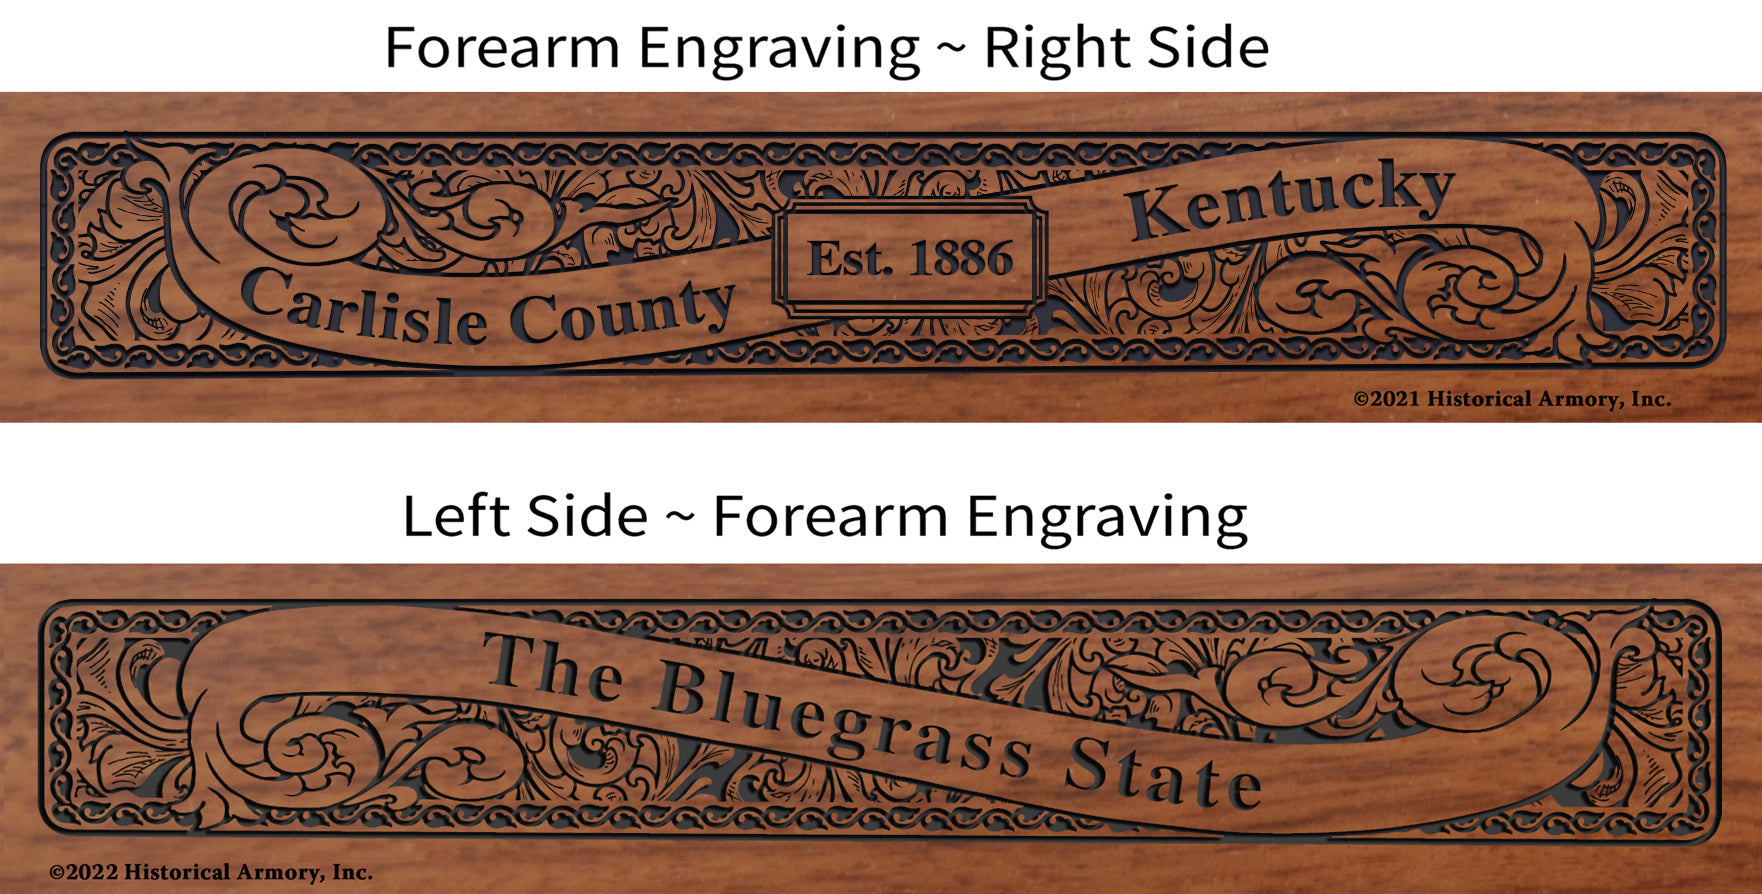 Carlisle County Kentucky Engraved Rifle Forearm